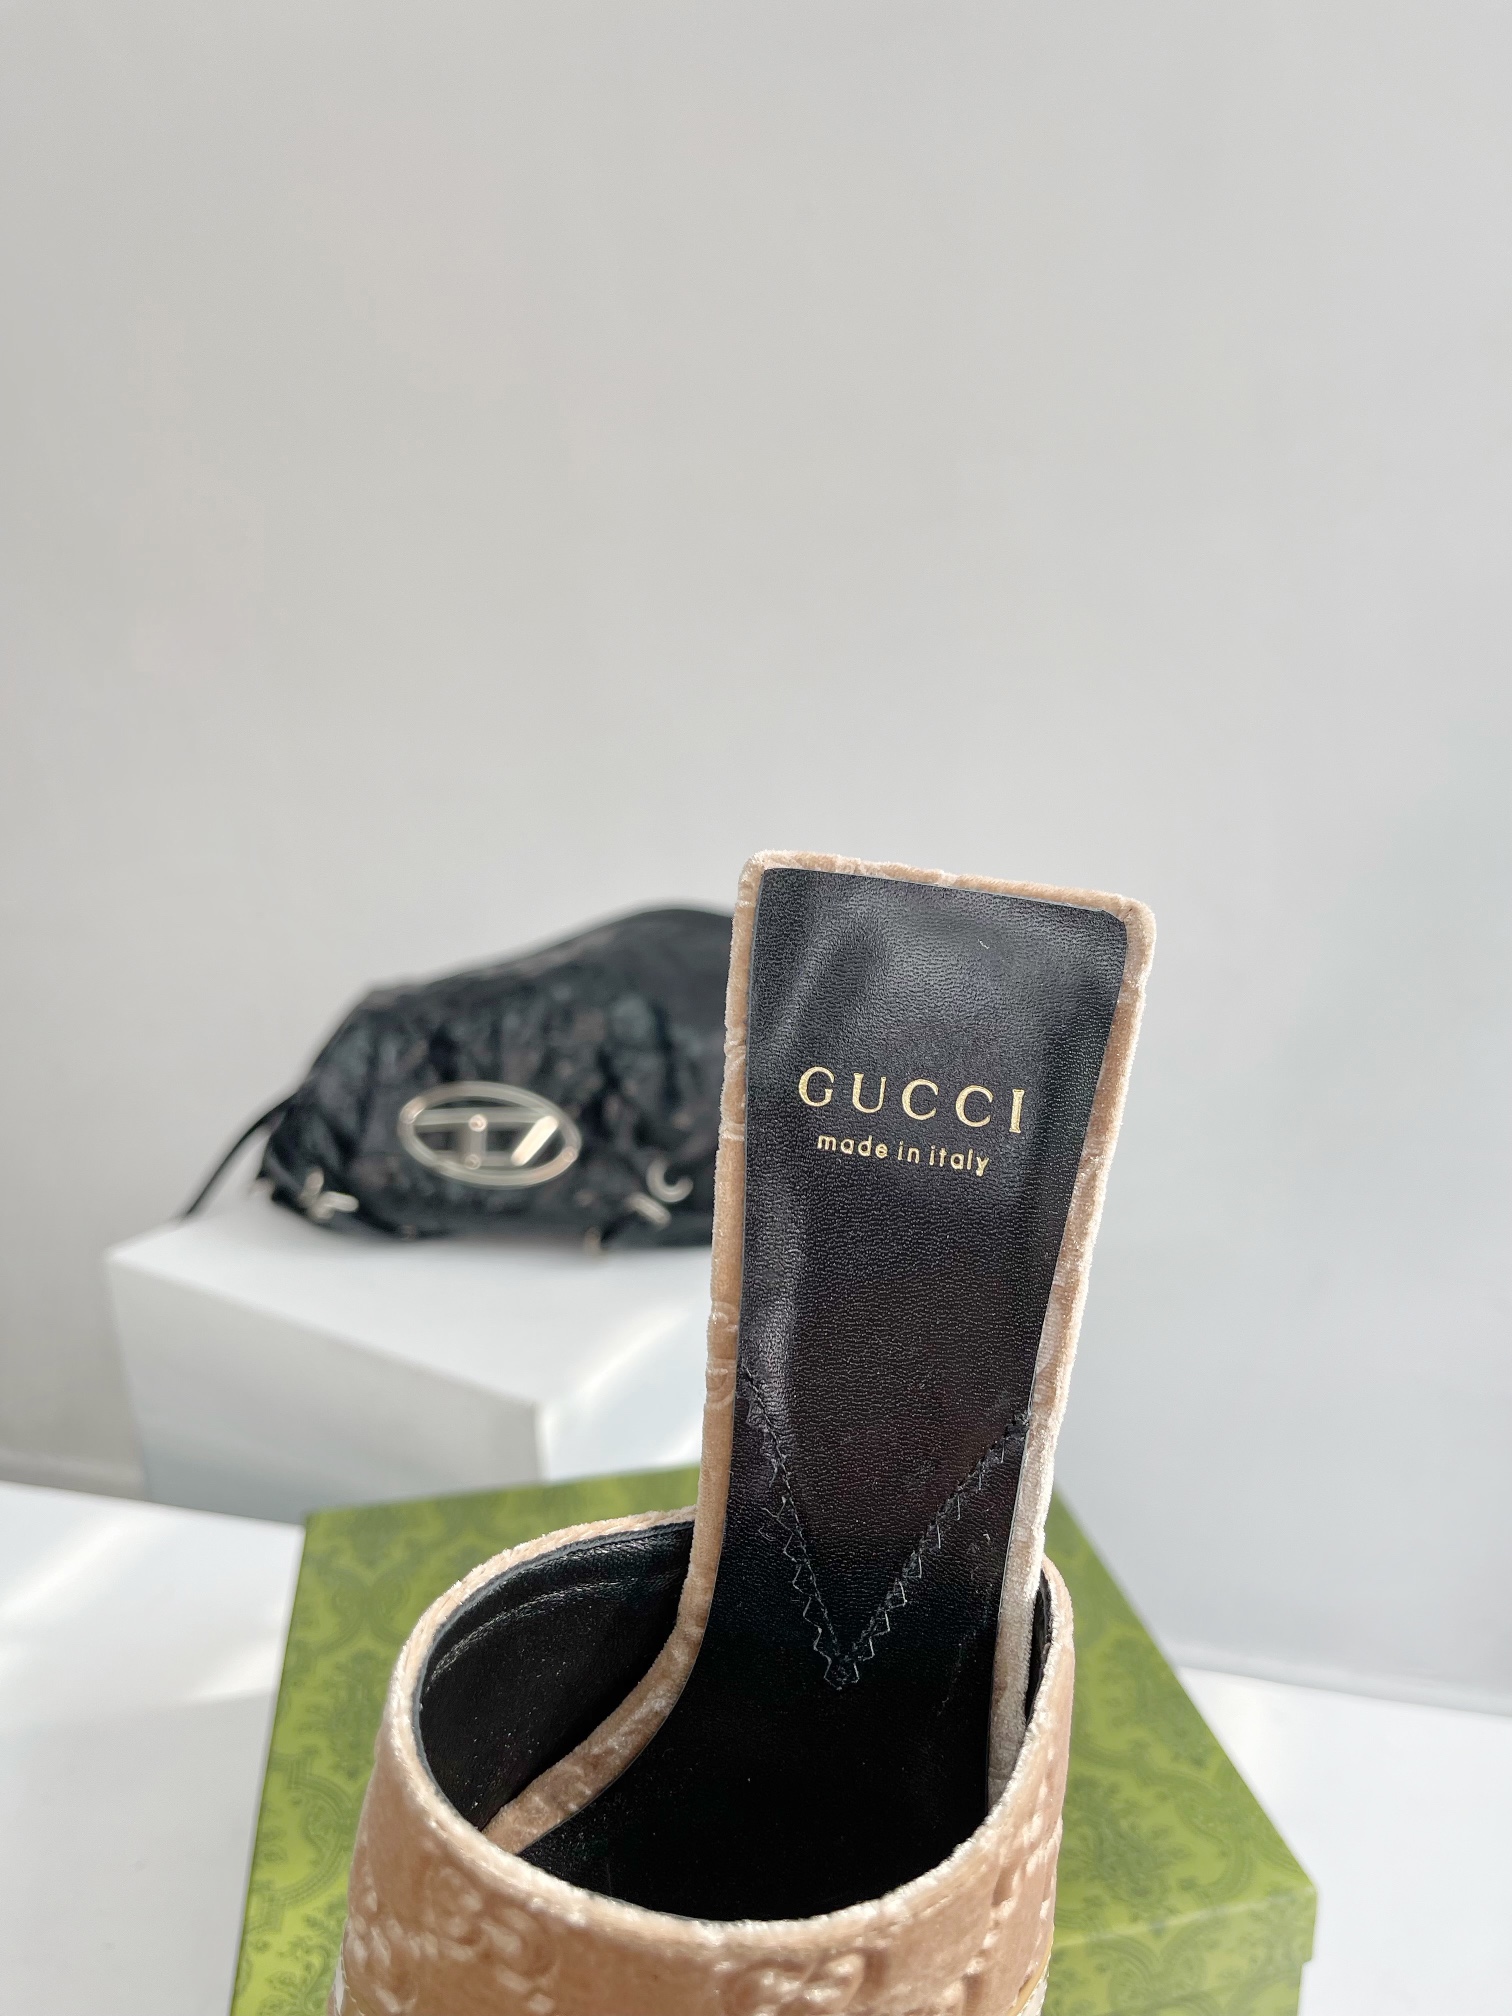 GUCCl最新系列推出[烟花][烟花][烟花]锥型跟圆形互扣式双GG新款凉鞋拖鞋原汁原味原单品质!每个细